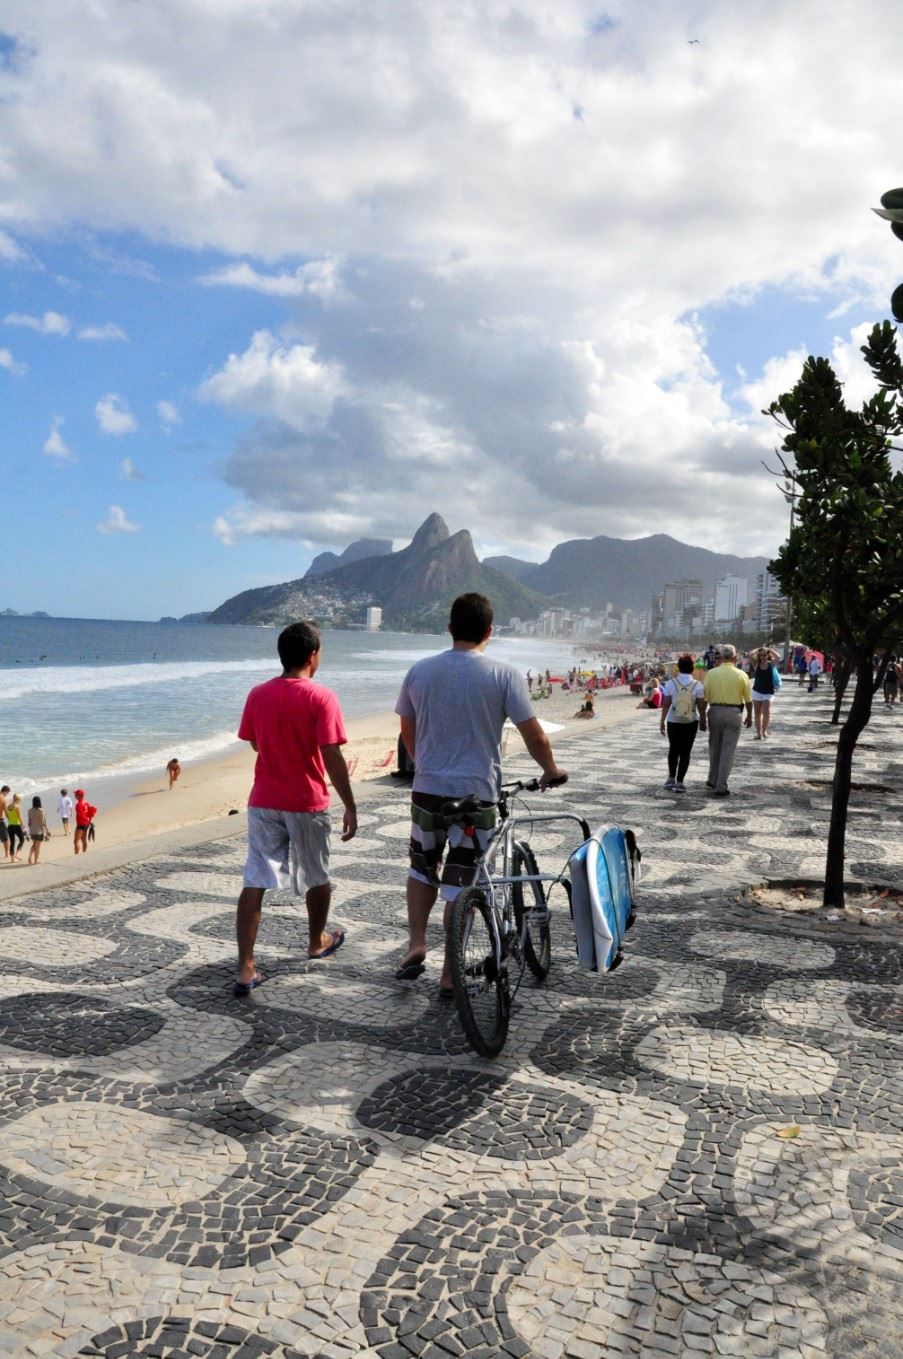 Walking down the promenade of Copacabana beach